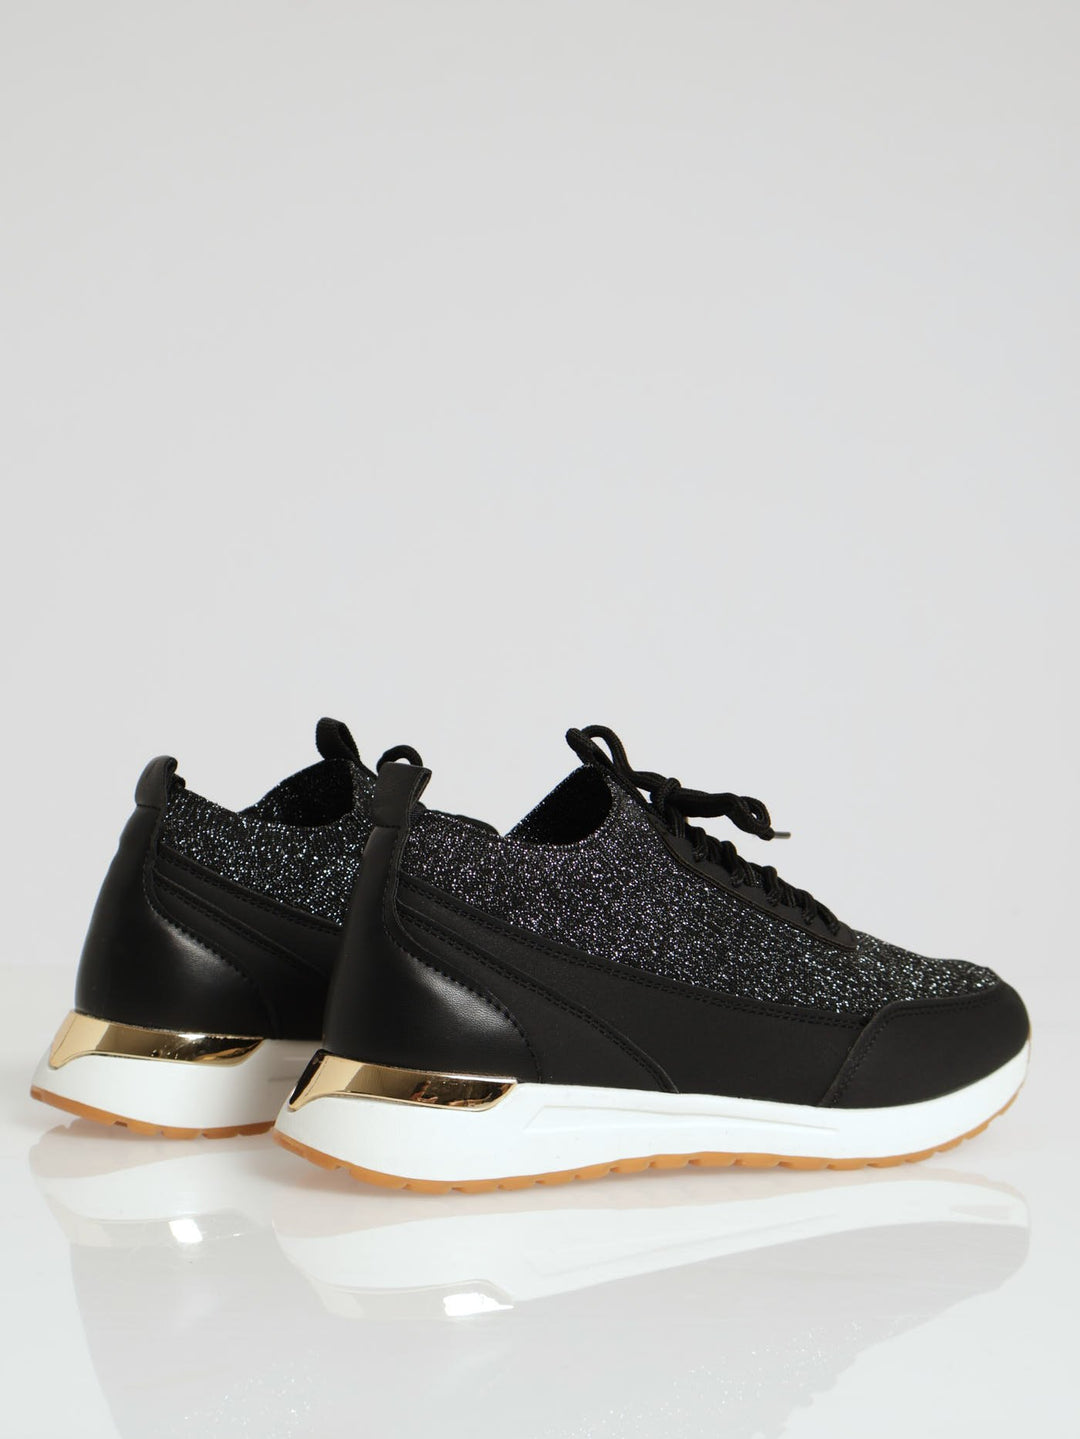 Lurex Fly Knit Lace Up Sneaker - Black